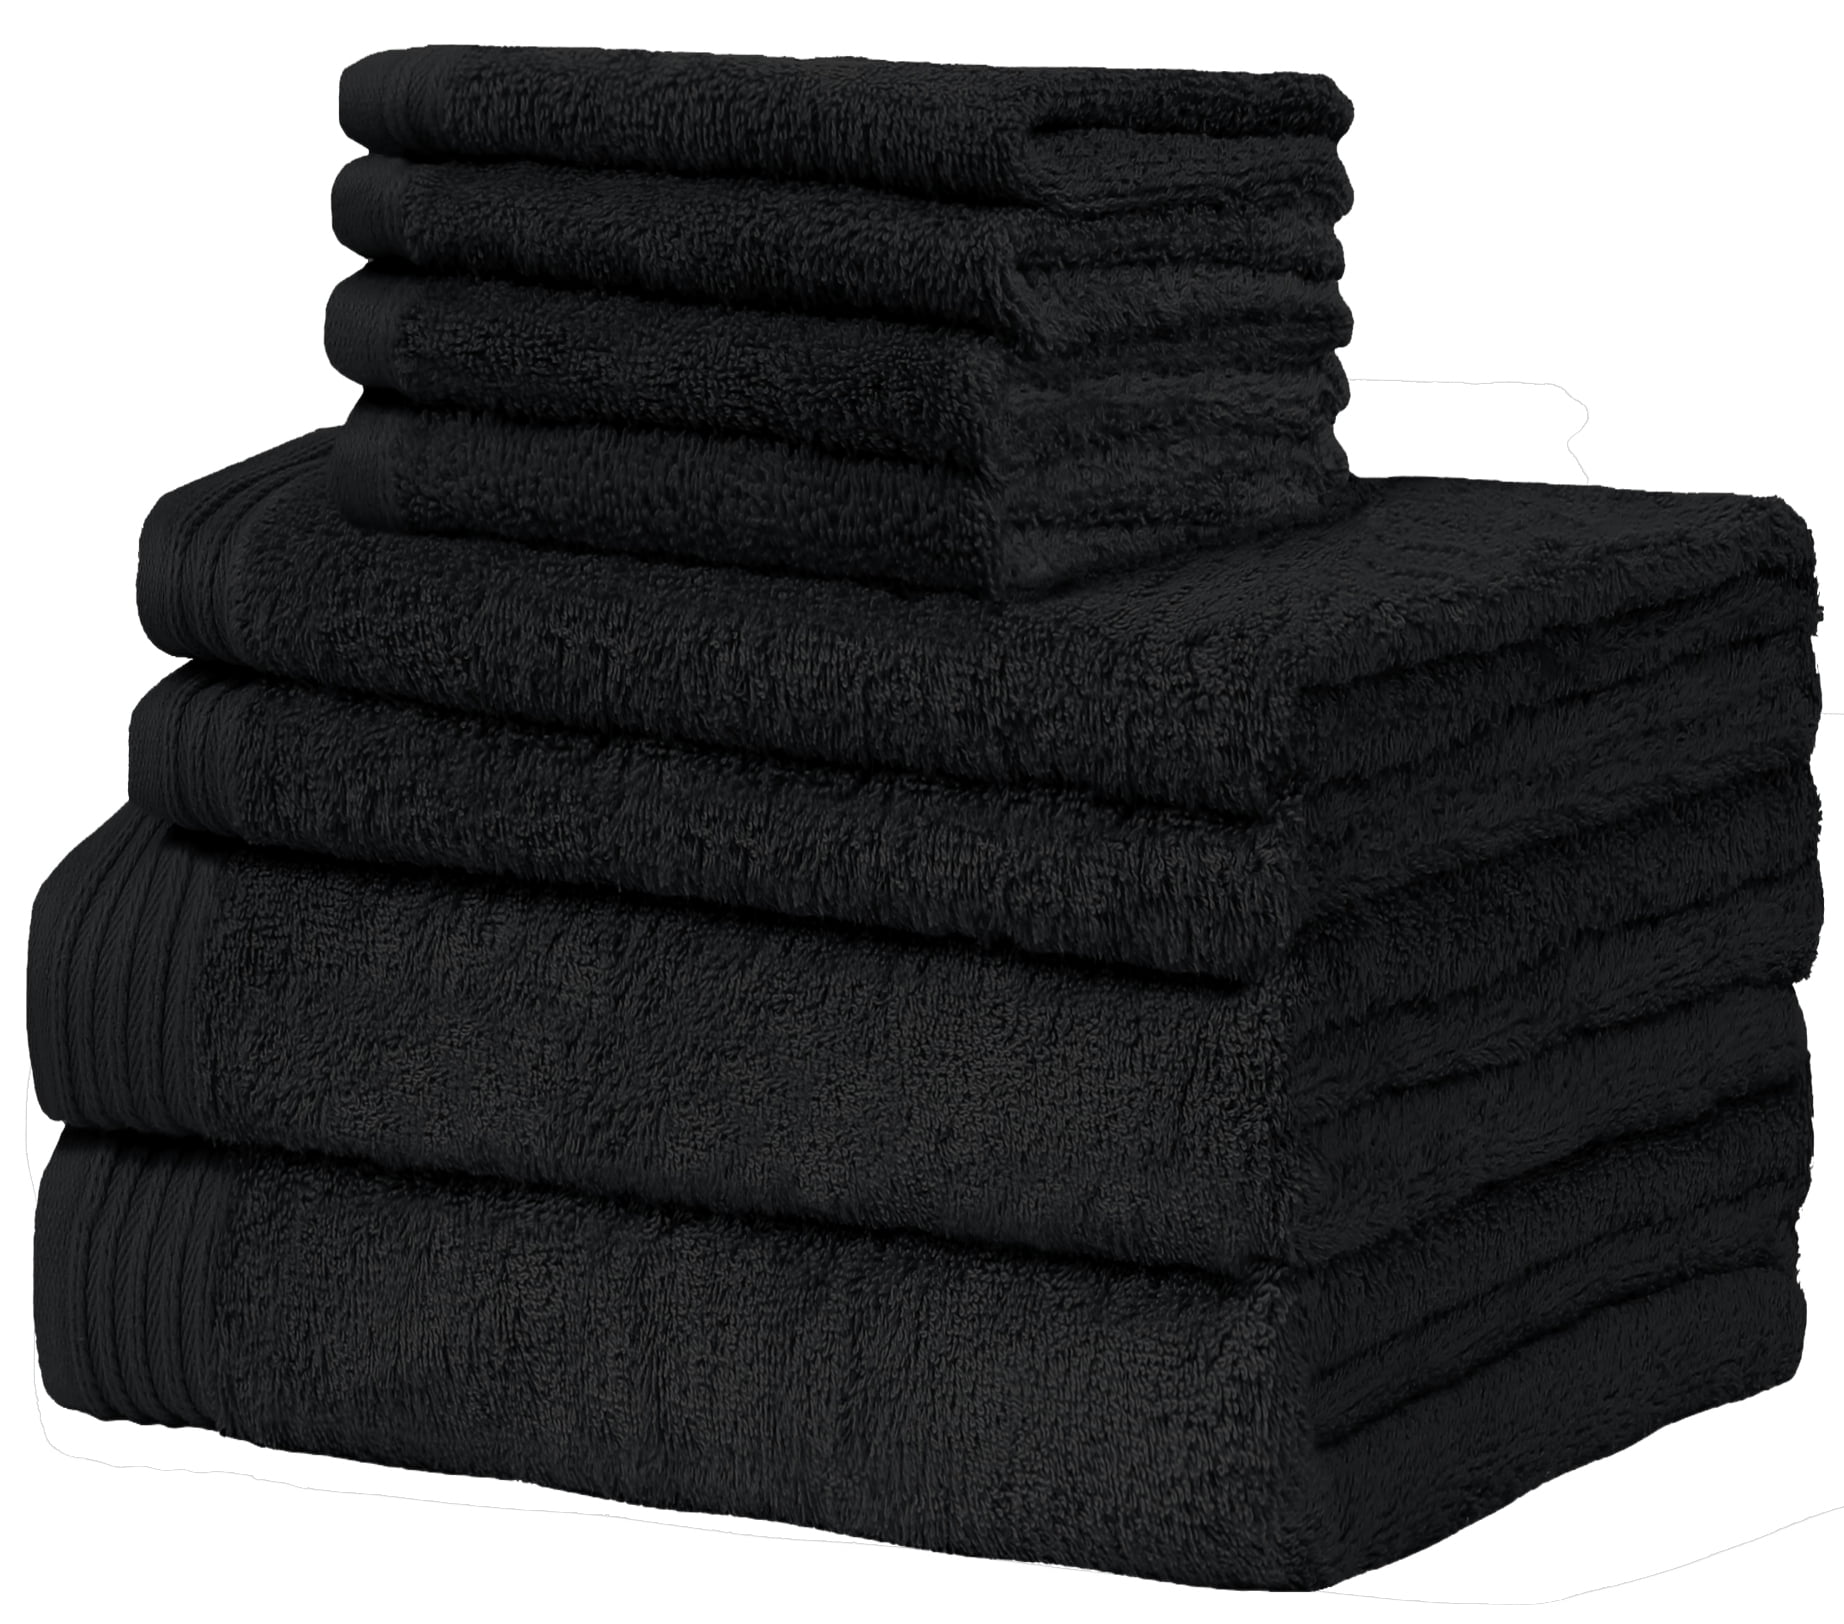 Details about   Extra Large Bath Sheet Towel Soft Absorbent Cotton 60 X 40 cm Lot Towels 